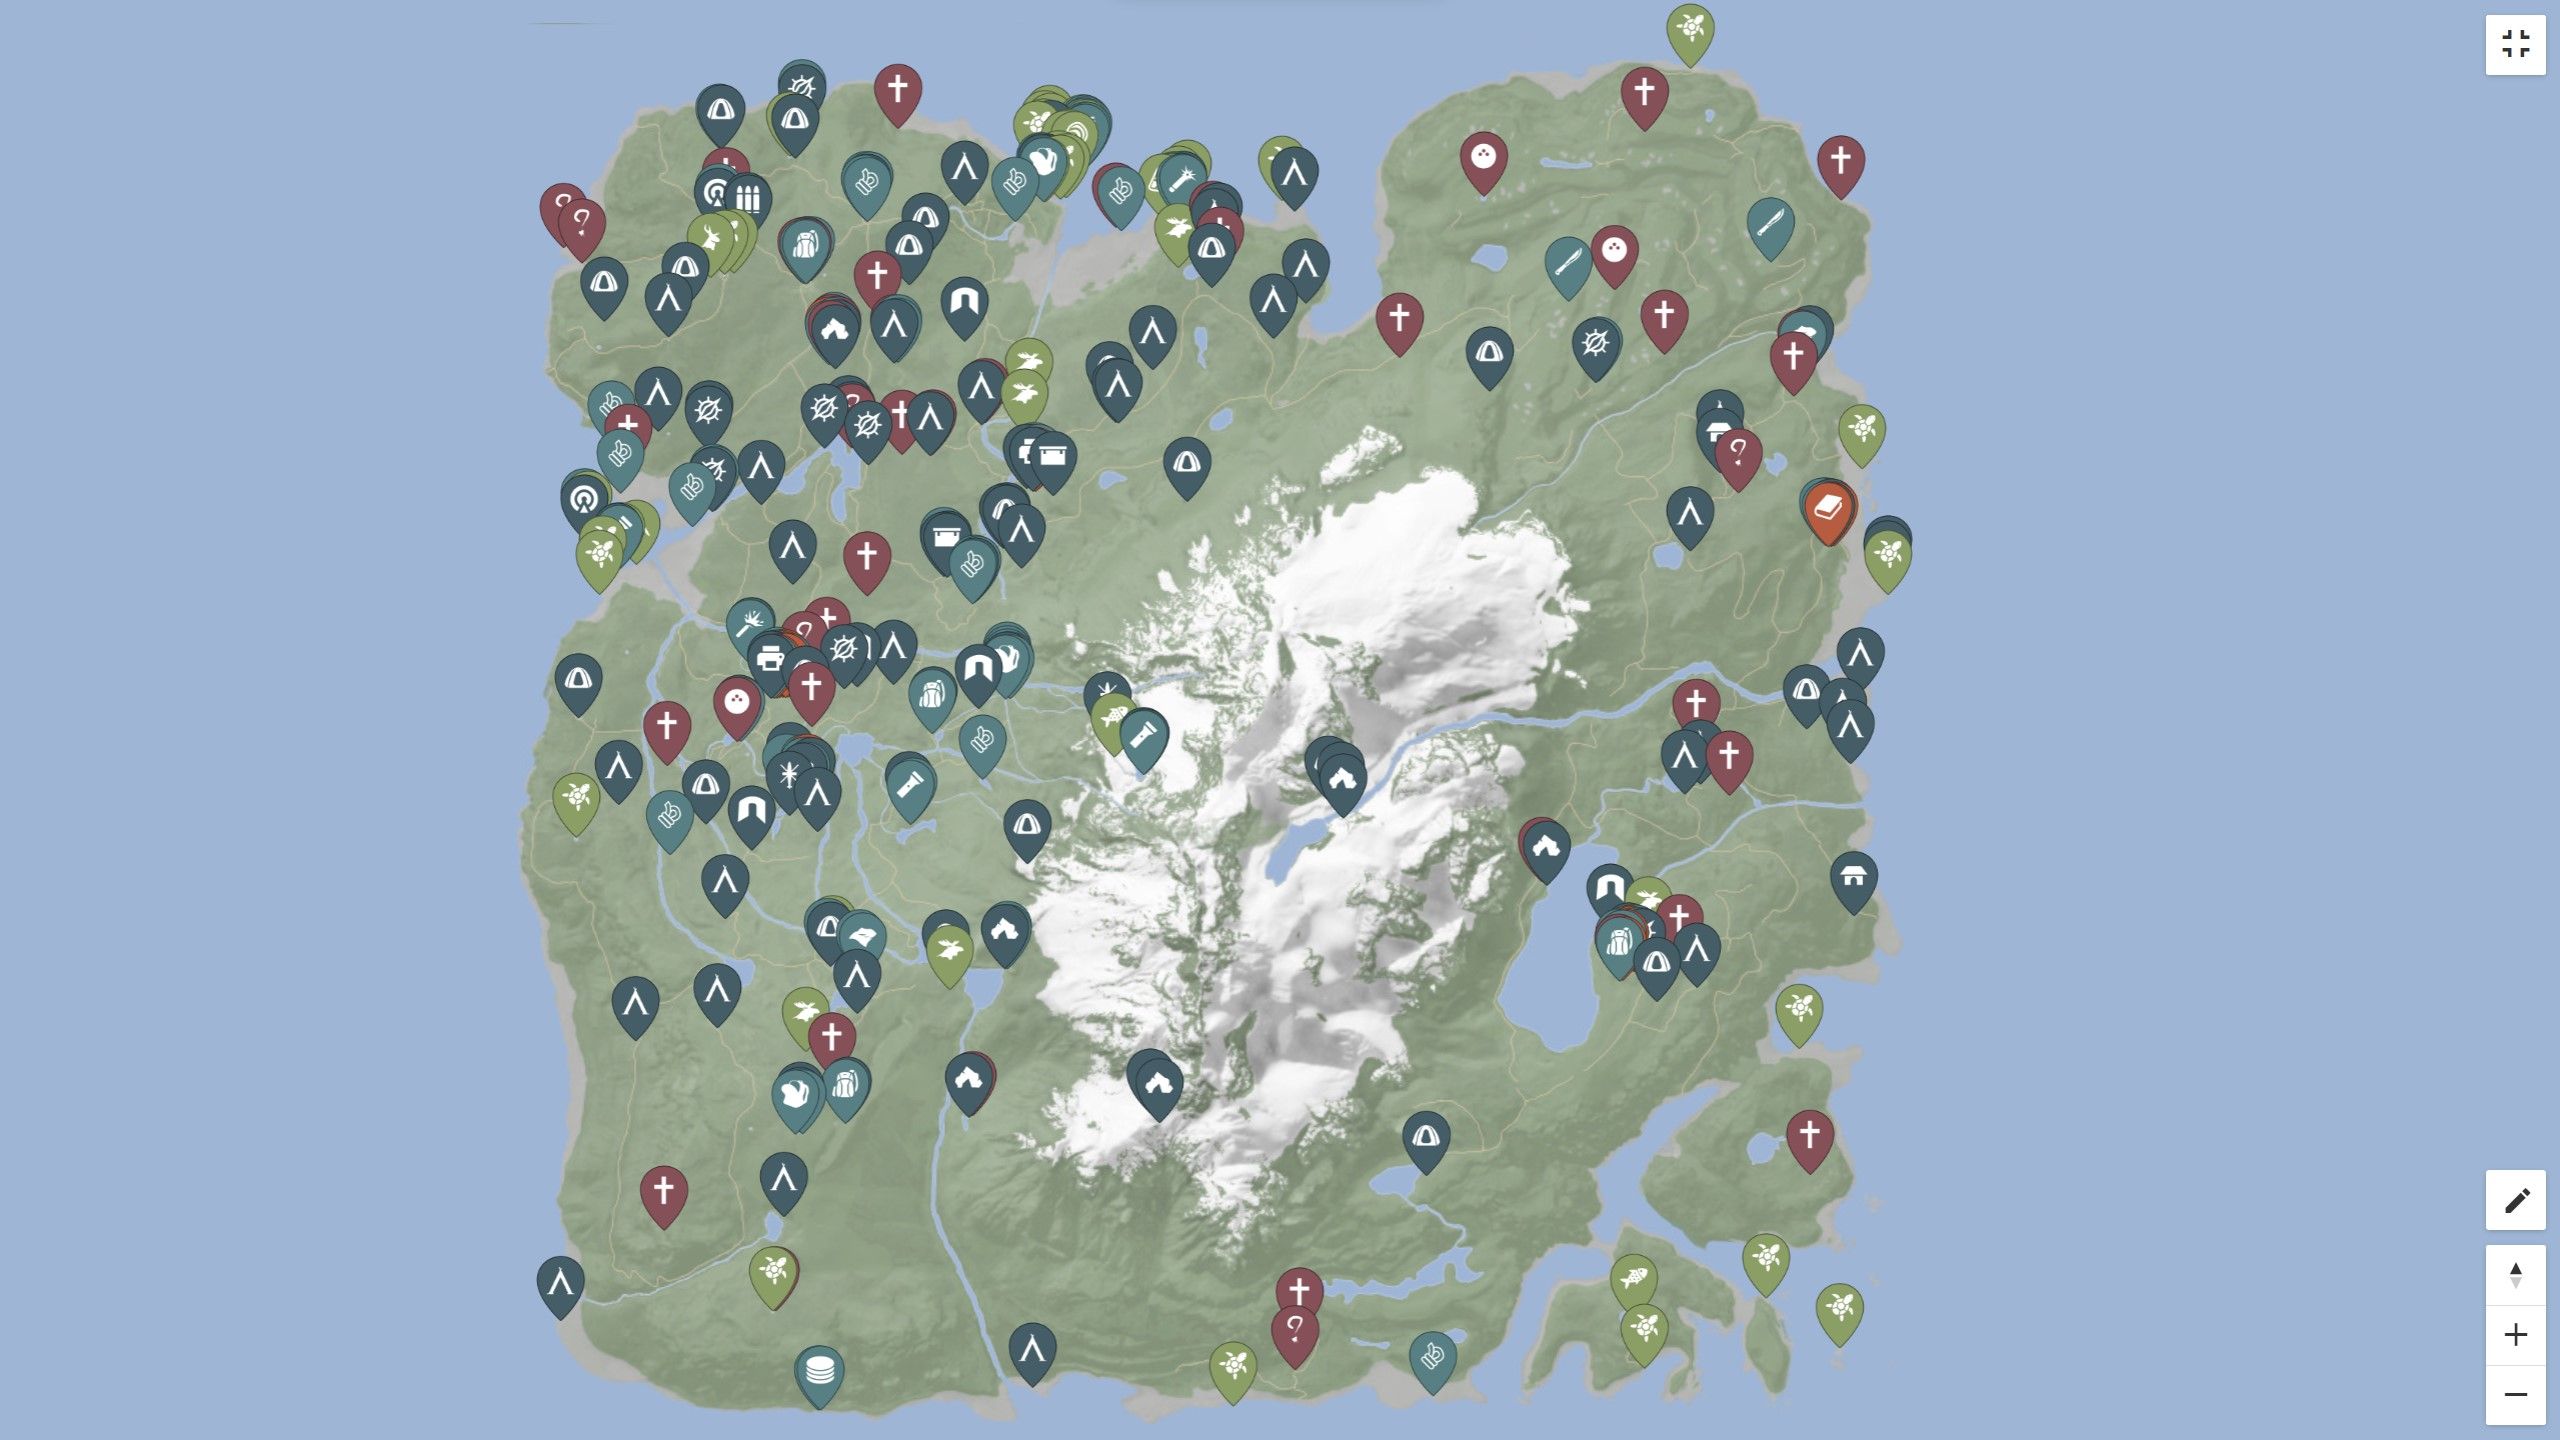 Sons of the Forest-itemlocaties: kaart uitgelegd